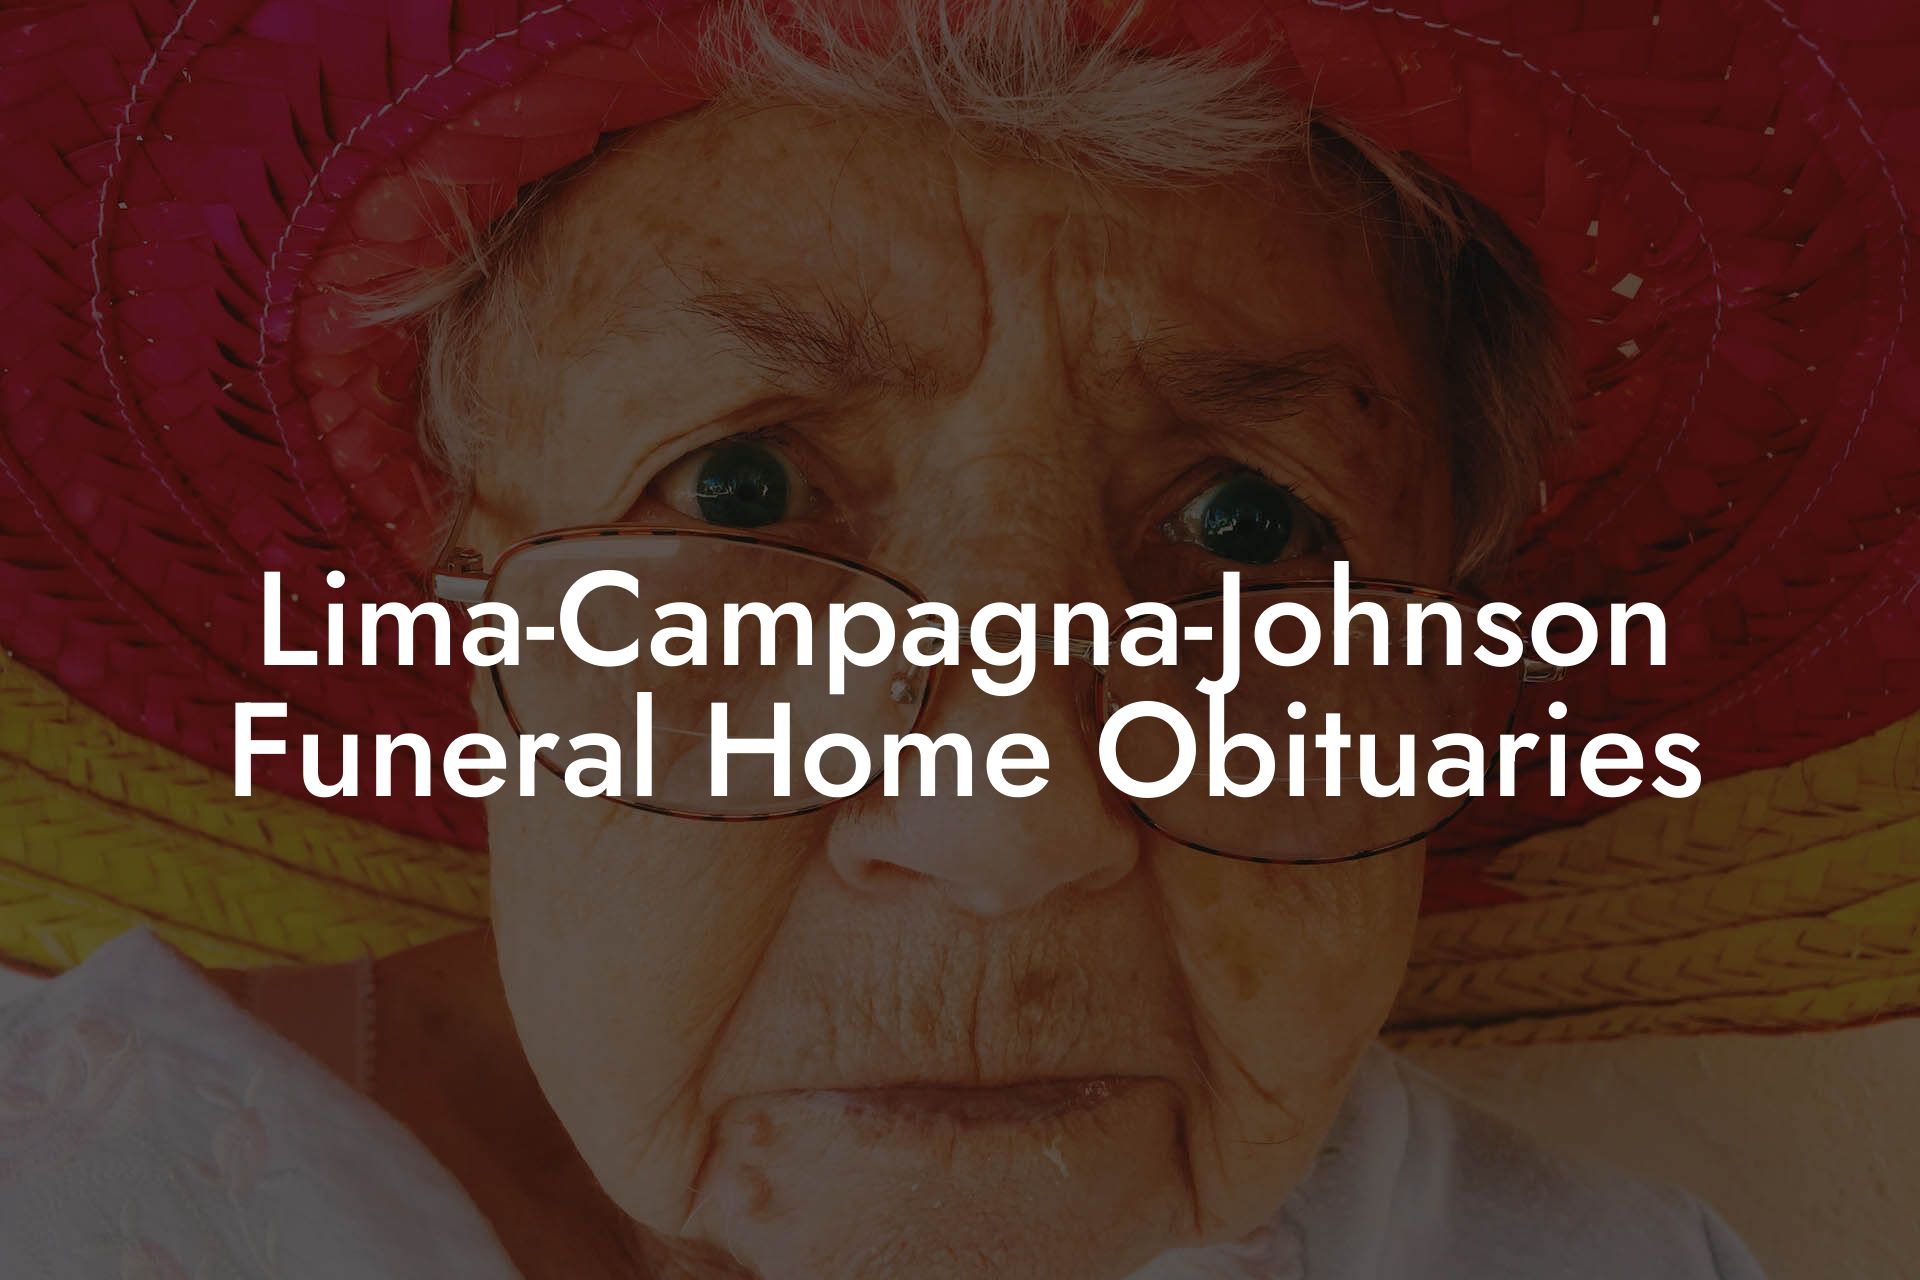 Lima-Campagna-Johnson Funeral Home Obituaries